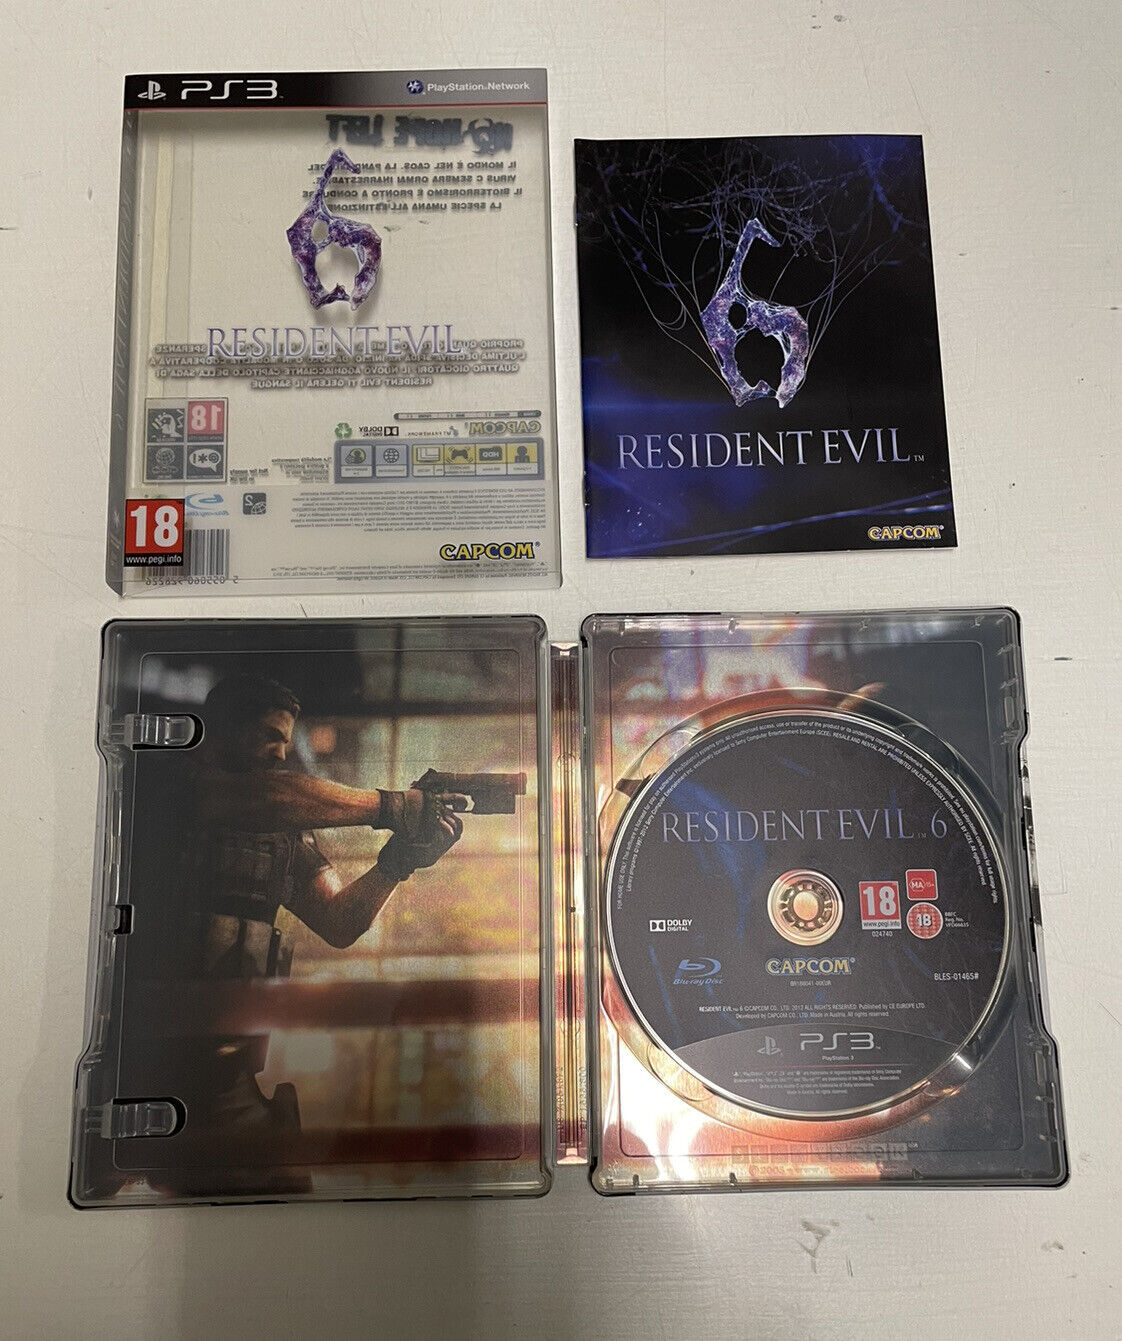 Ps3-Playstation-Resident-Evil-6-Steelbook-Pal-ita-Artbook-Limited-Bundle-134347618705-3